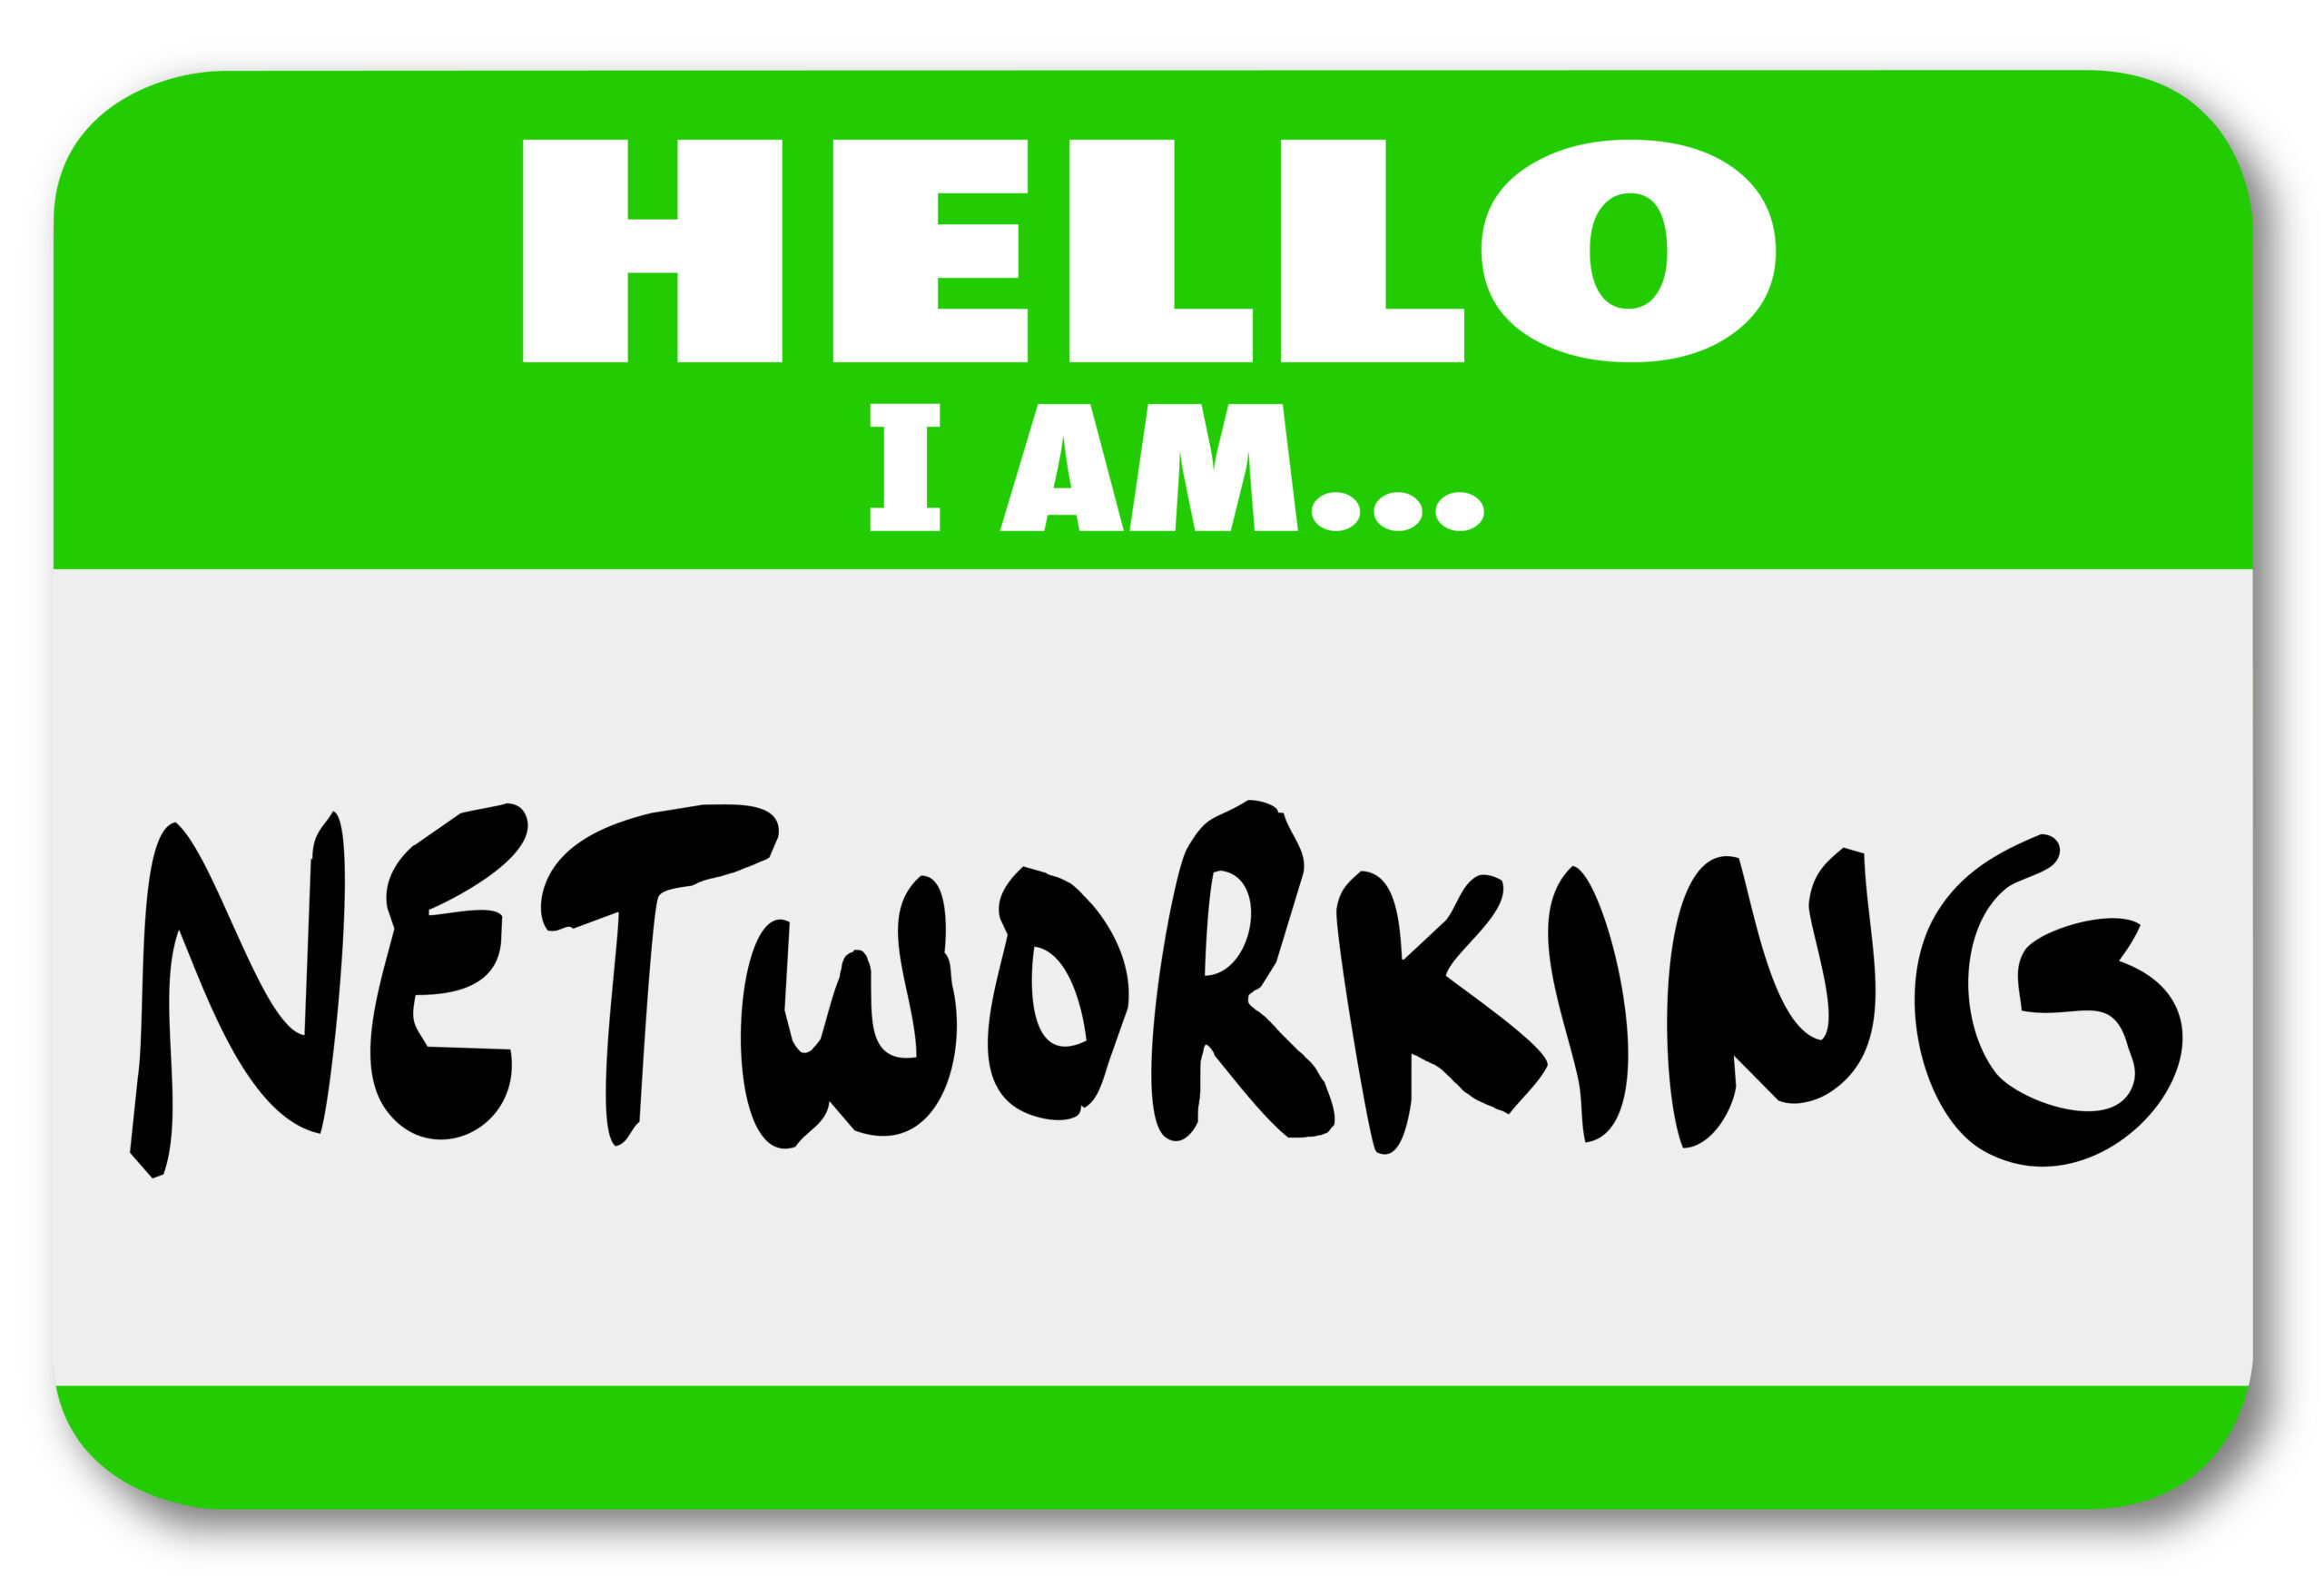 Hello I am Networking